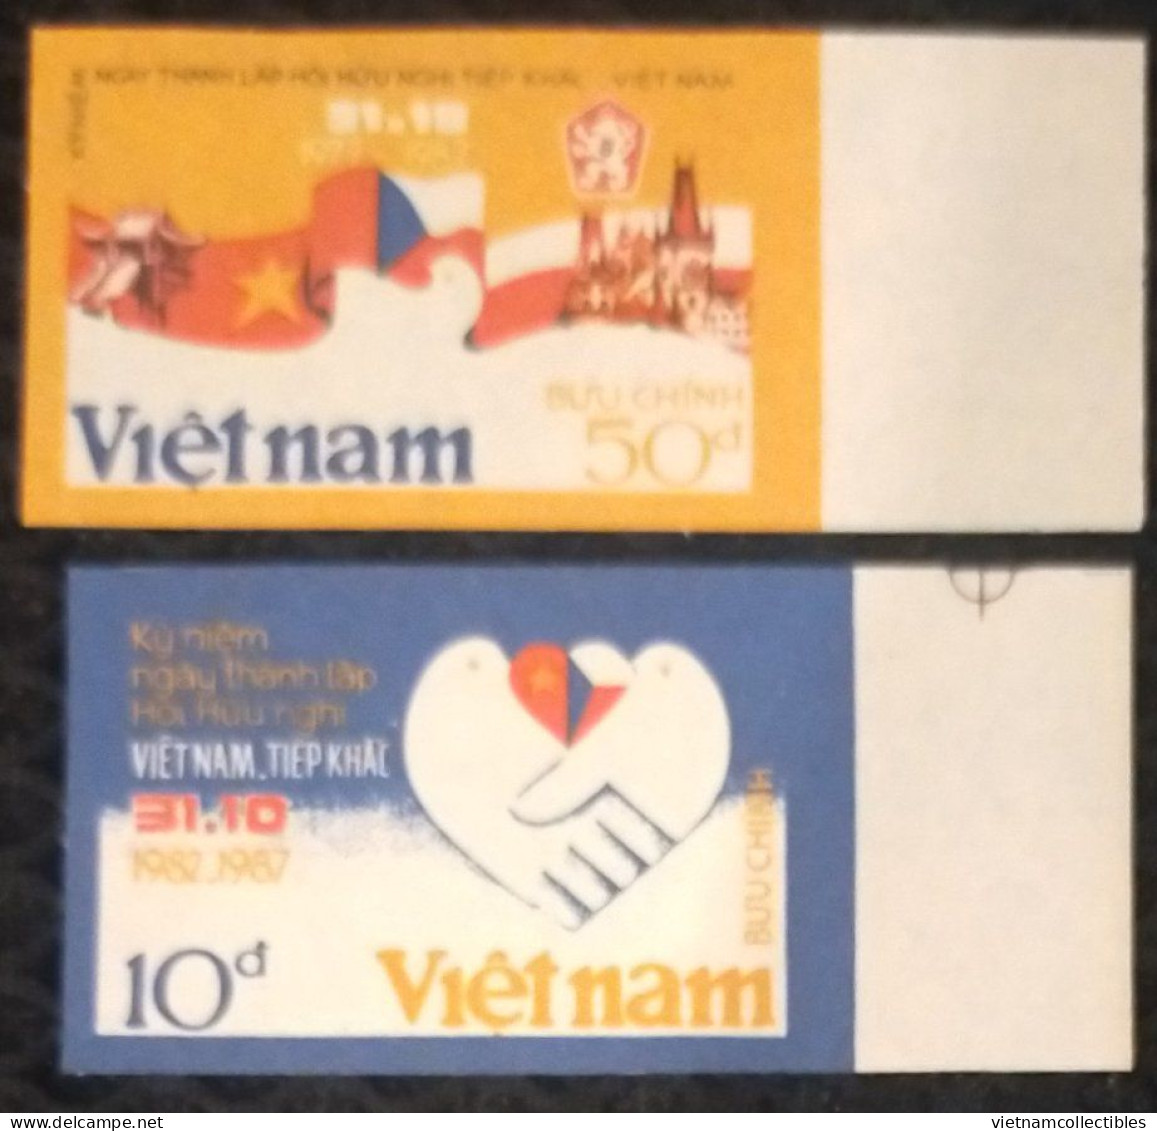 Vietnam MNH Imperf Stamps 1987 : 5th Anniversary Of Viet Nam Czechslovakian Friendship Treaty (Ms526) - Viêt-Nam